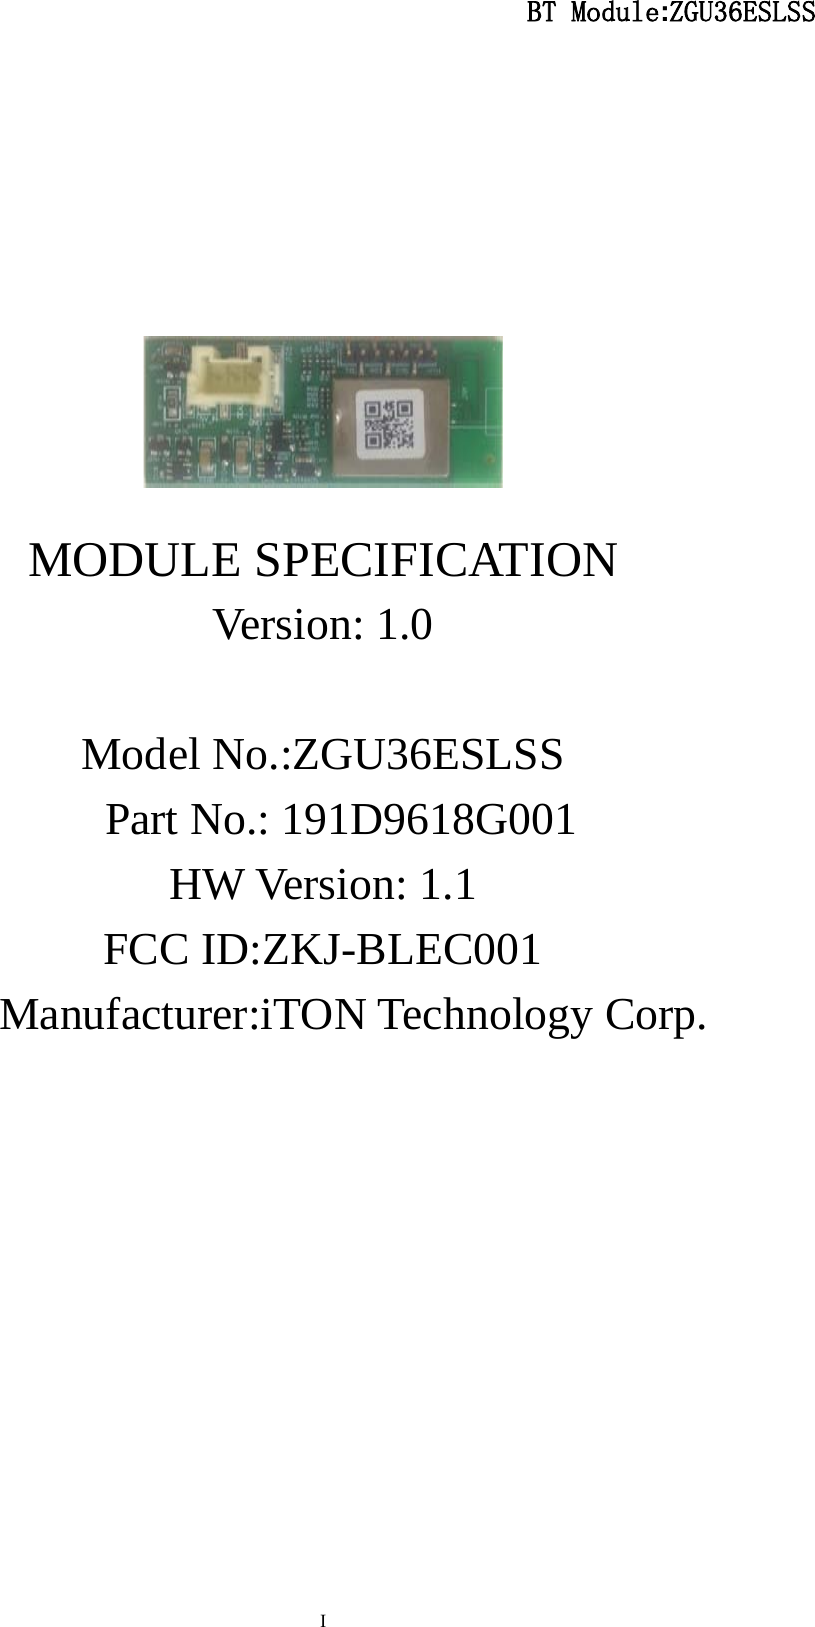                                                  BT Module:ZGU36ESLSS                                                                                                                                                                                 I       MODULE SPECIFICATION Version: 1.0  Model No.:ZGU36ESLSS             Part No.: 191D9618G001 HW Version: 1.1 FCC ID:ZKJ-BLEC001                   Manufacturer:iTON Technology Corp.         